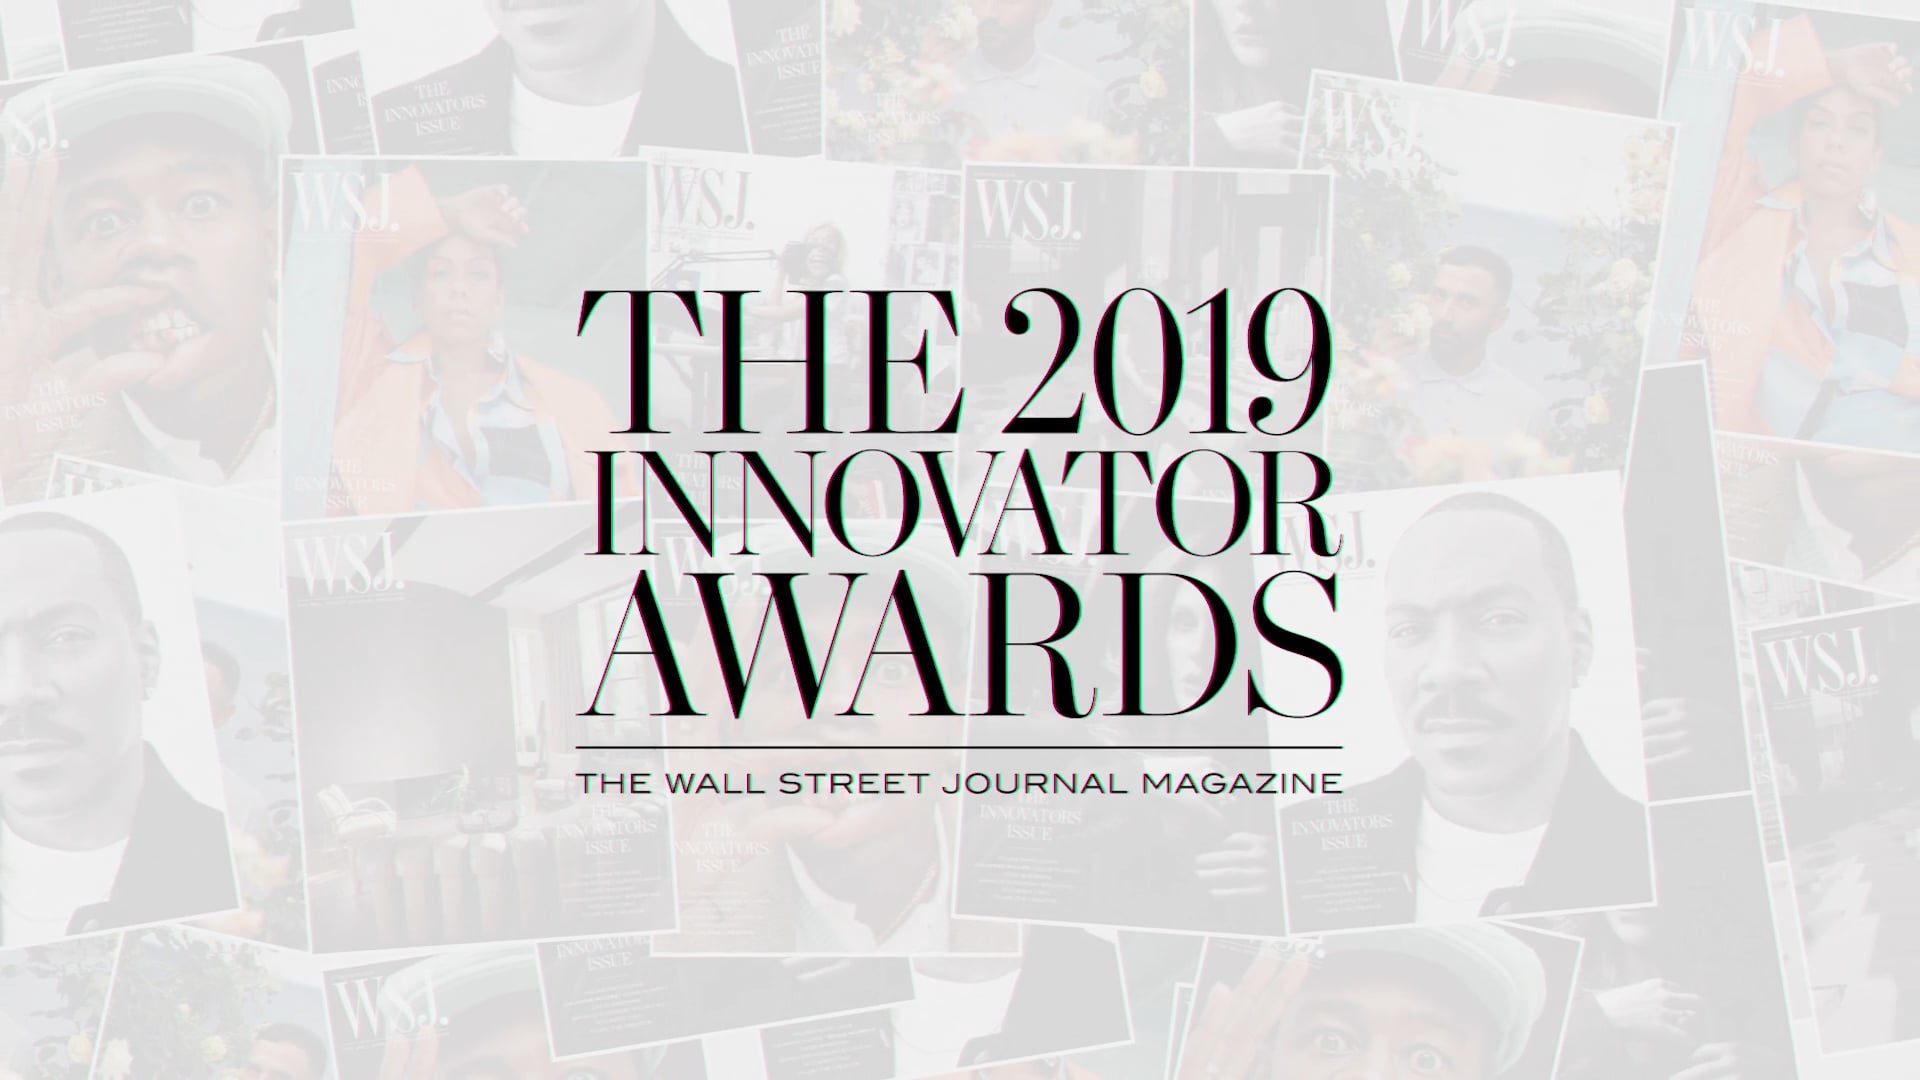 Wall Street Journal Magazine: Innovators Awards 2019